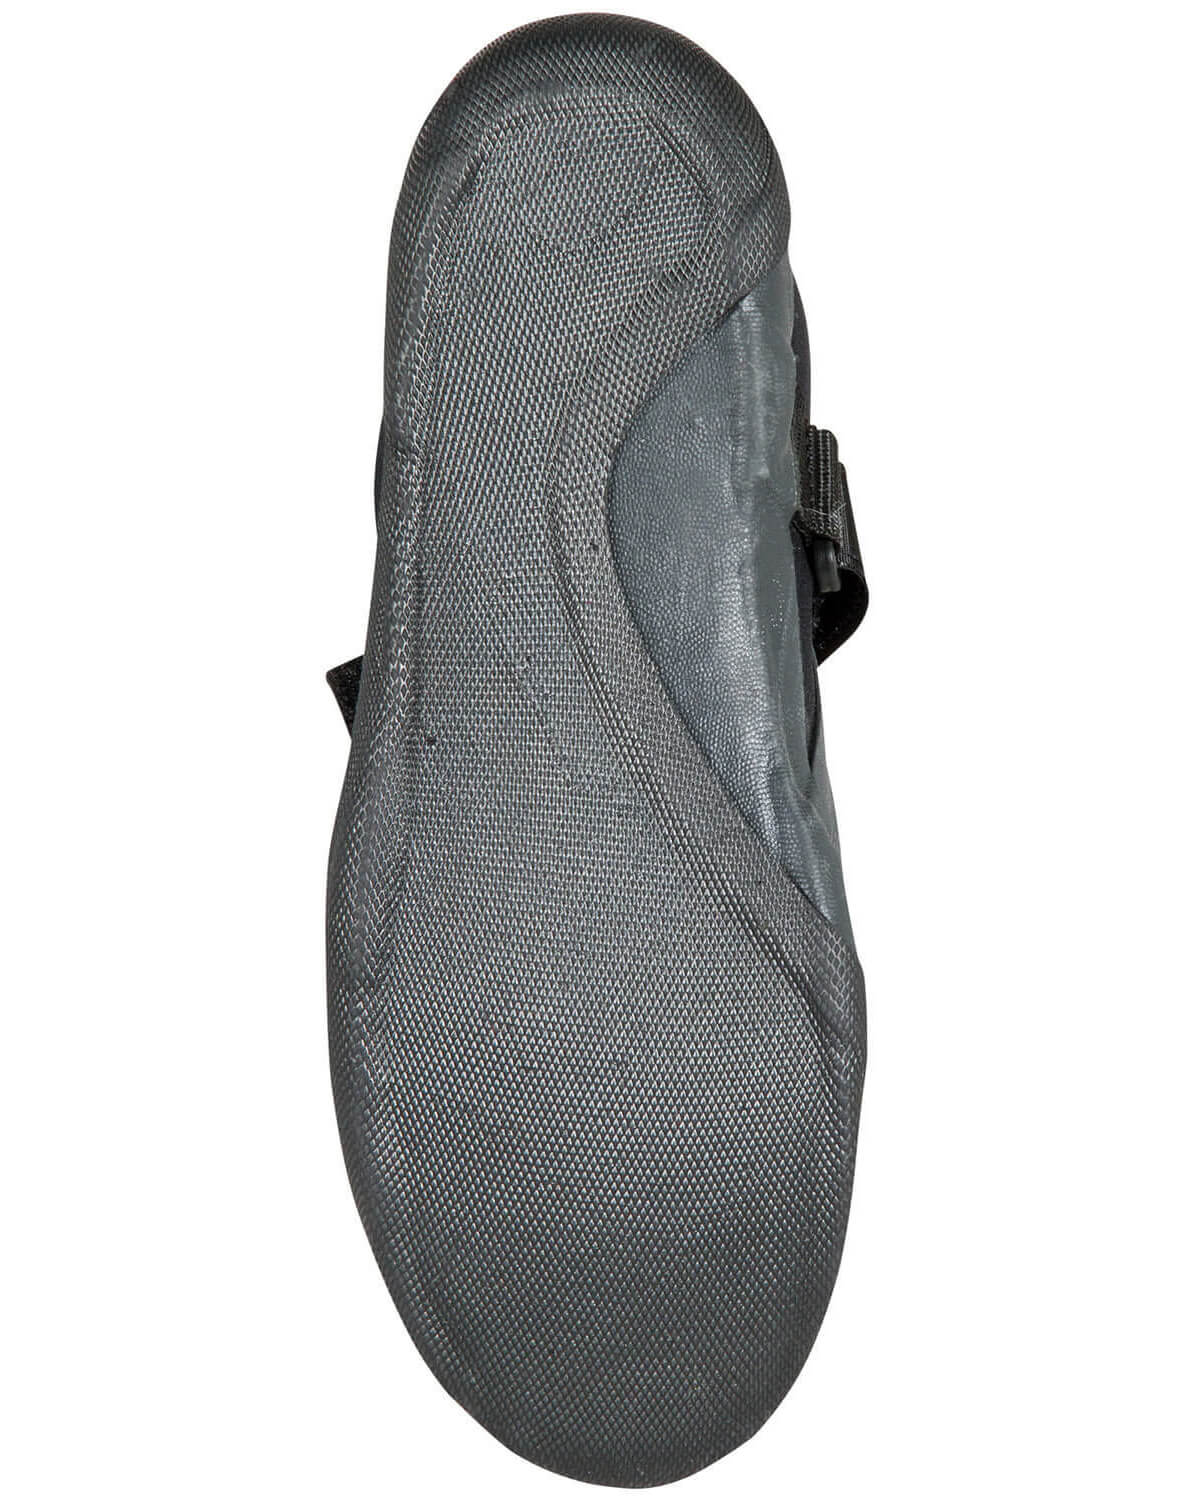 2mm HyperFlex PRO Low-Top Reef Wetsuit Boots